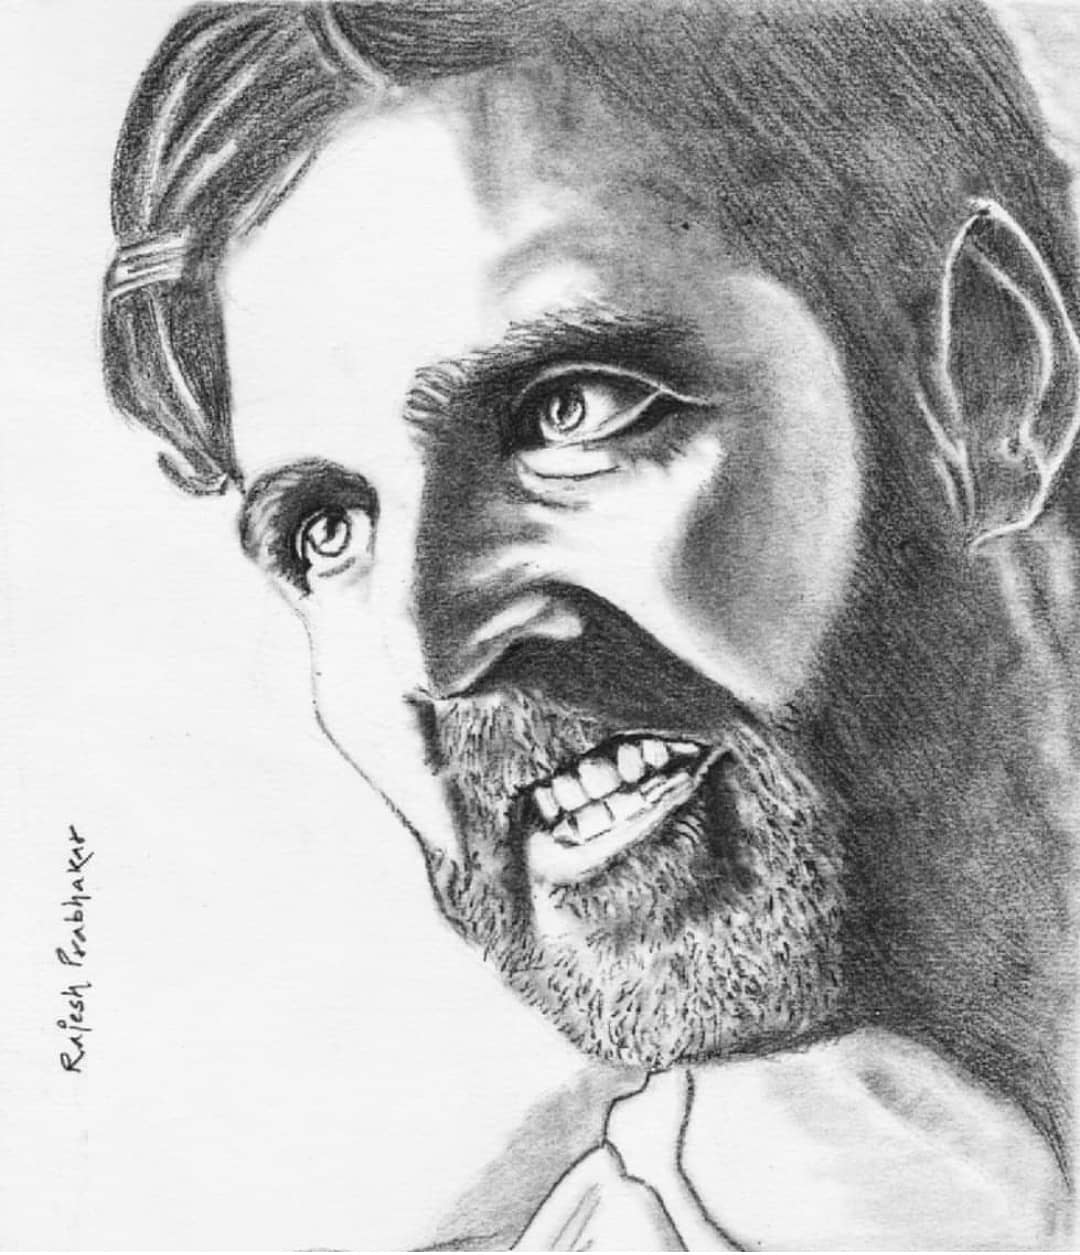 My Sketch :. Akshay Kumar.
Wishing u a very Happy Birthday !! 